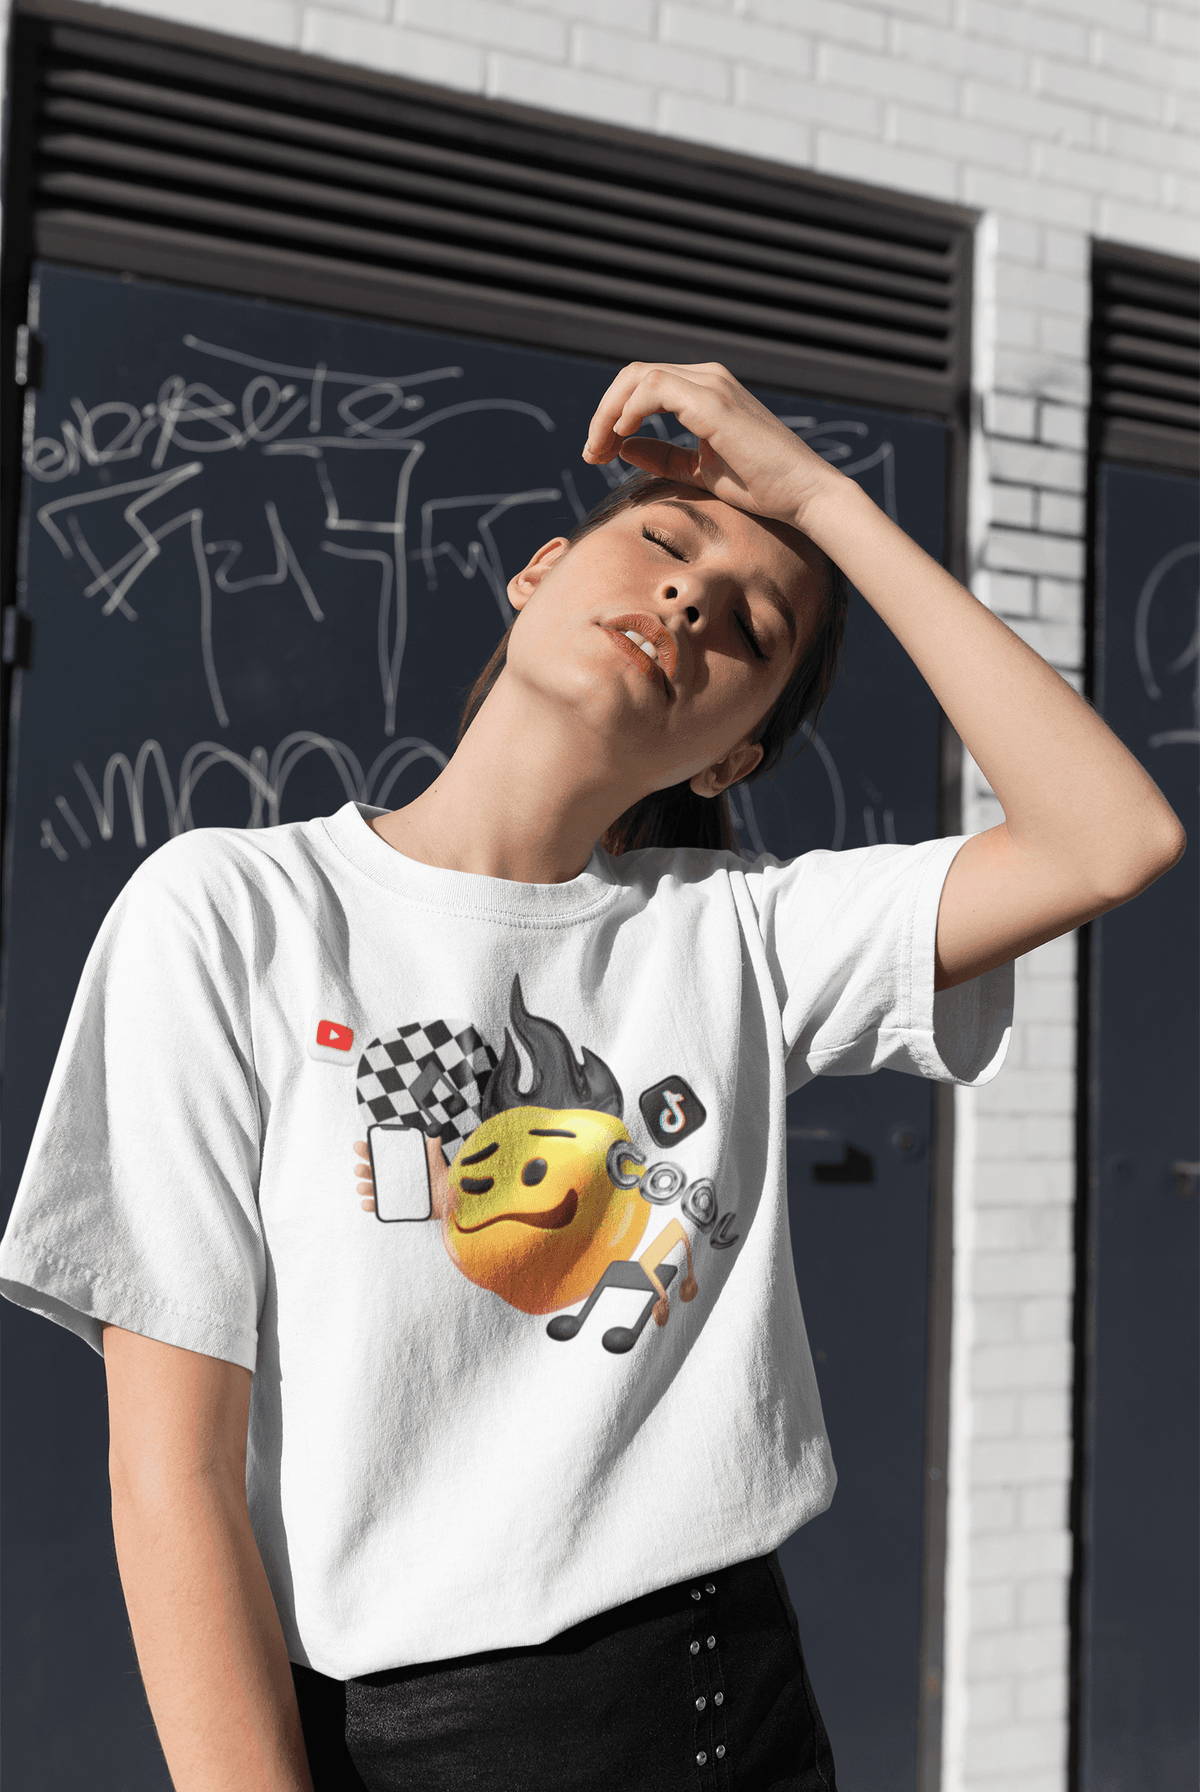 Emoji Cant keep up witj Social Life T-shirt - StylinArt